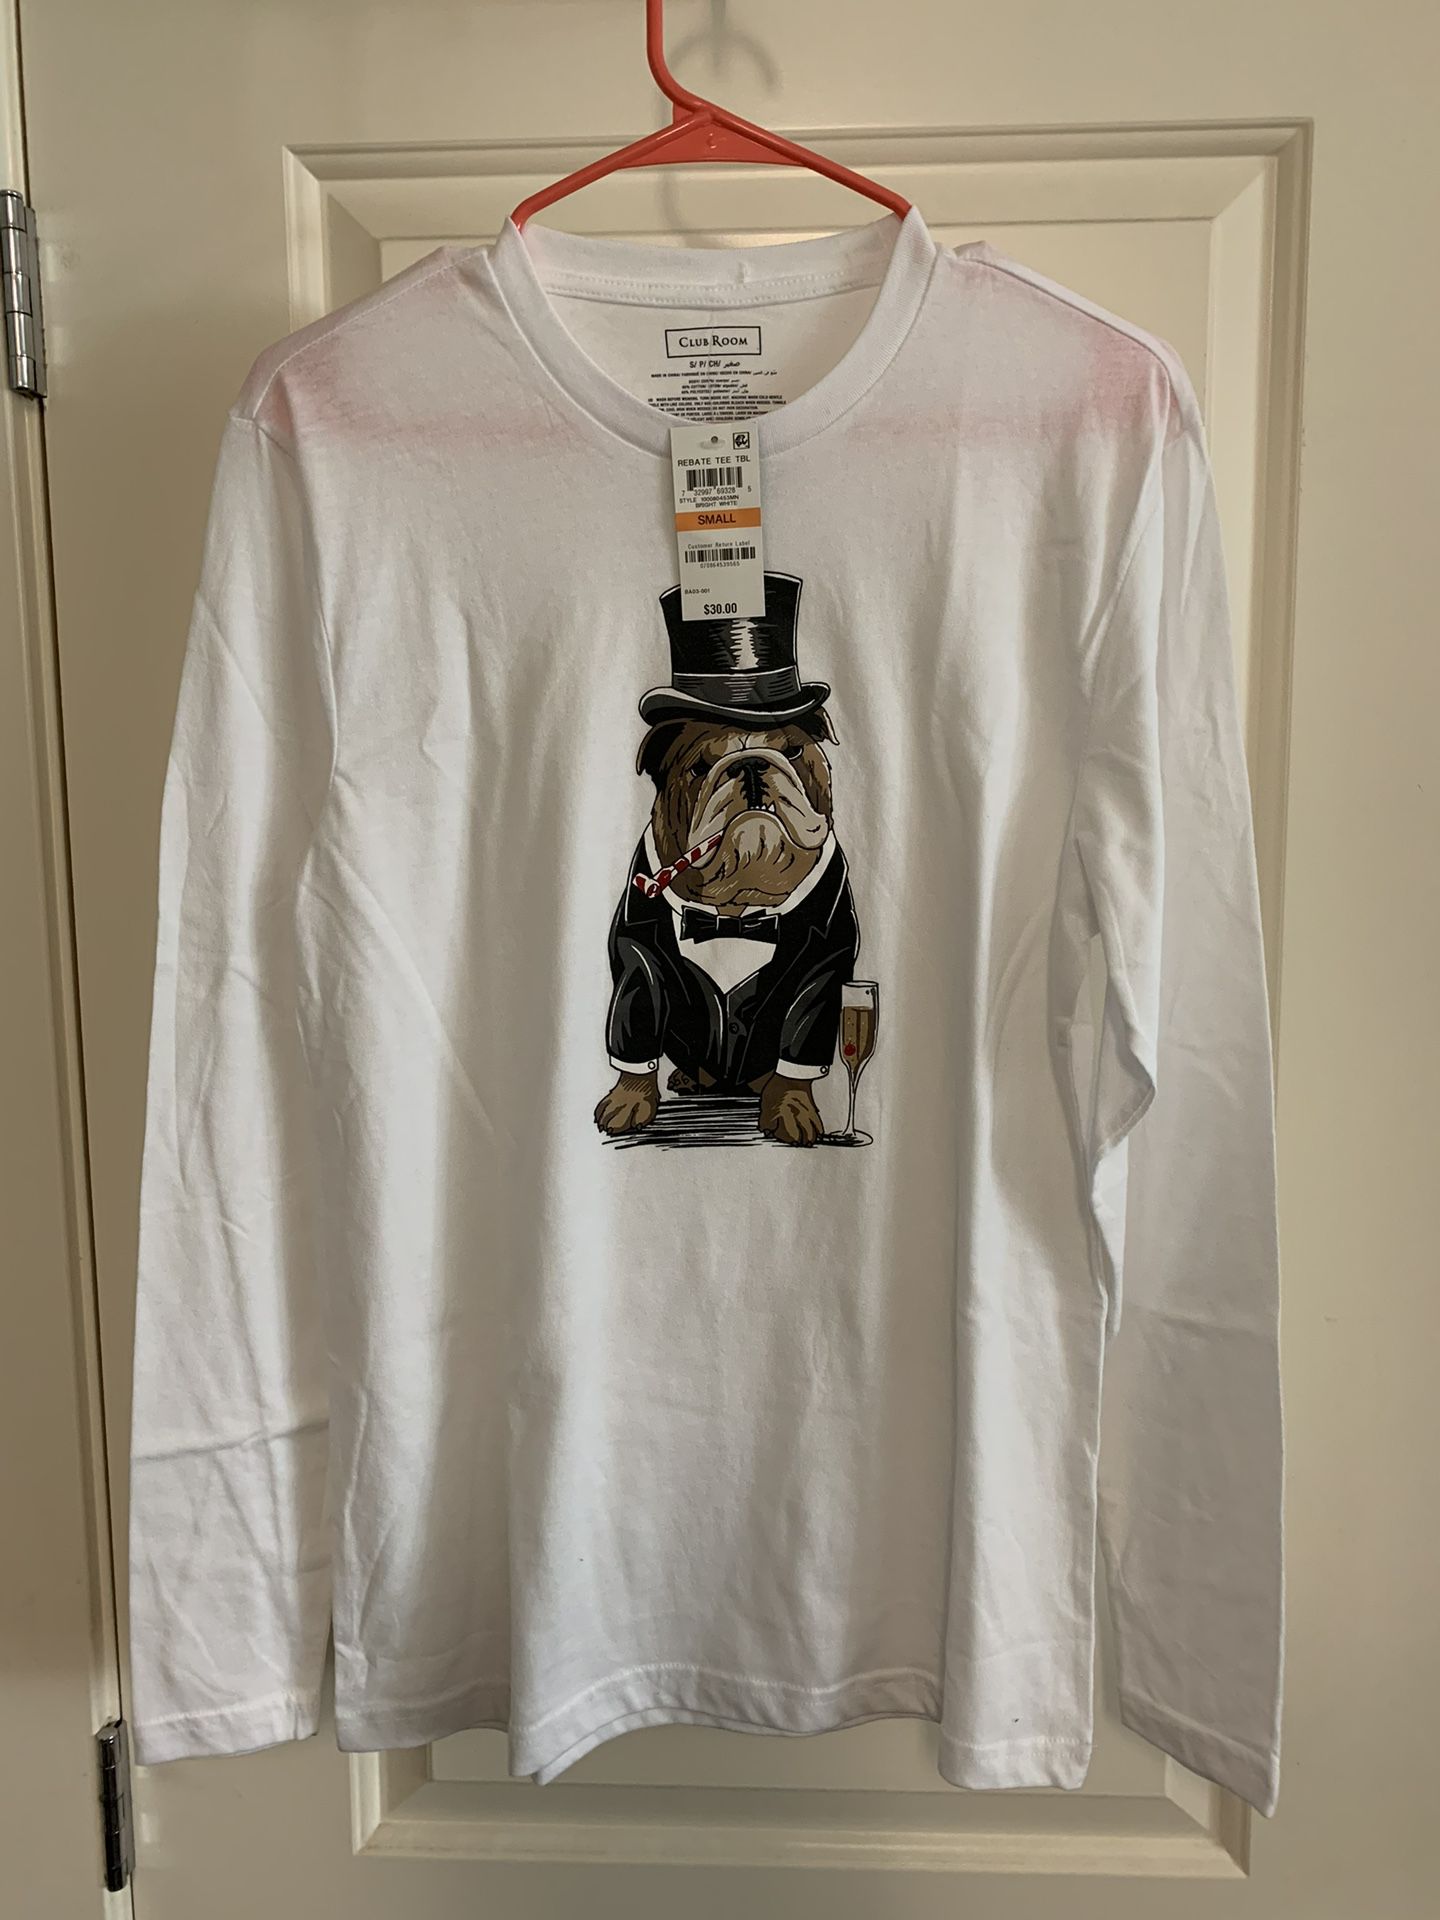 (2) - Club Room - Bulldog - Long sleeve - T-Shirts - (New)